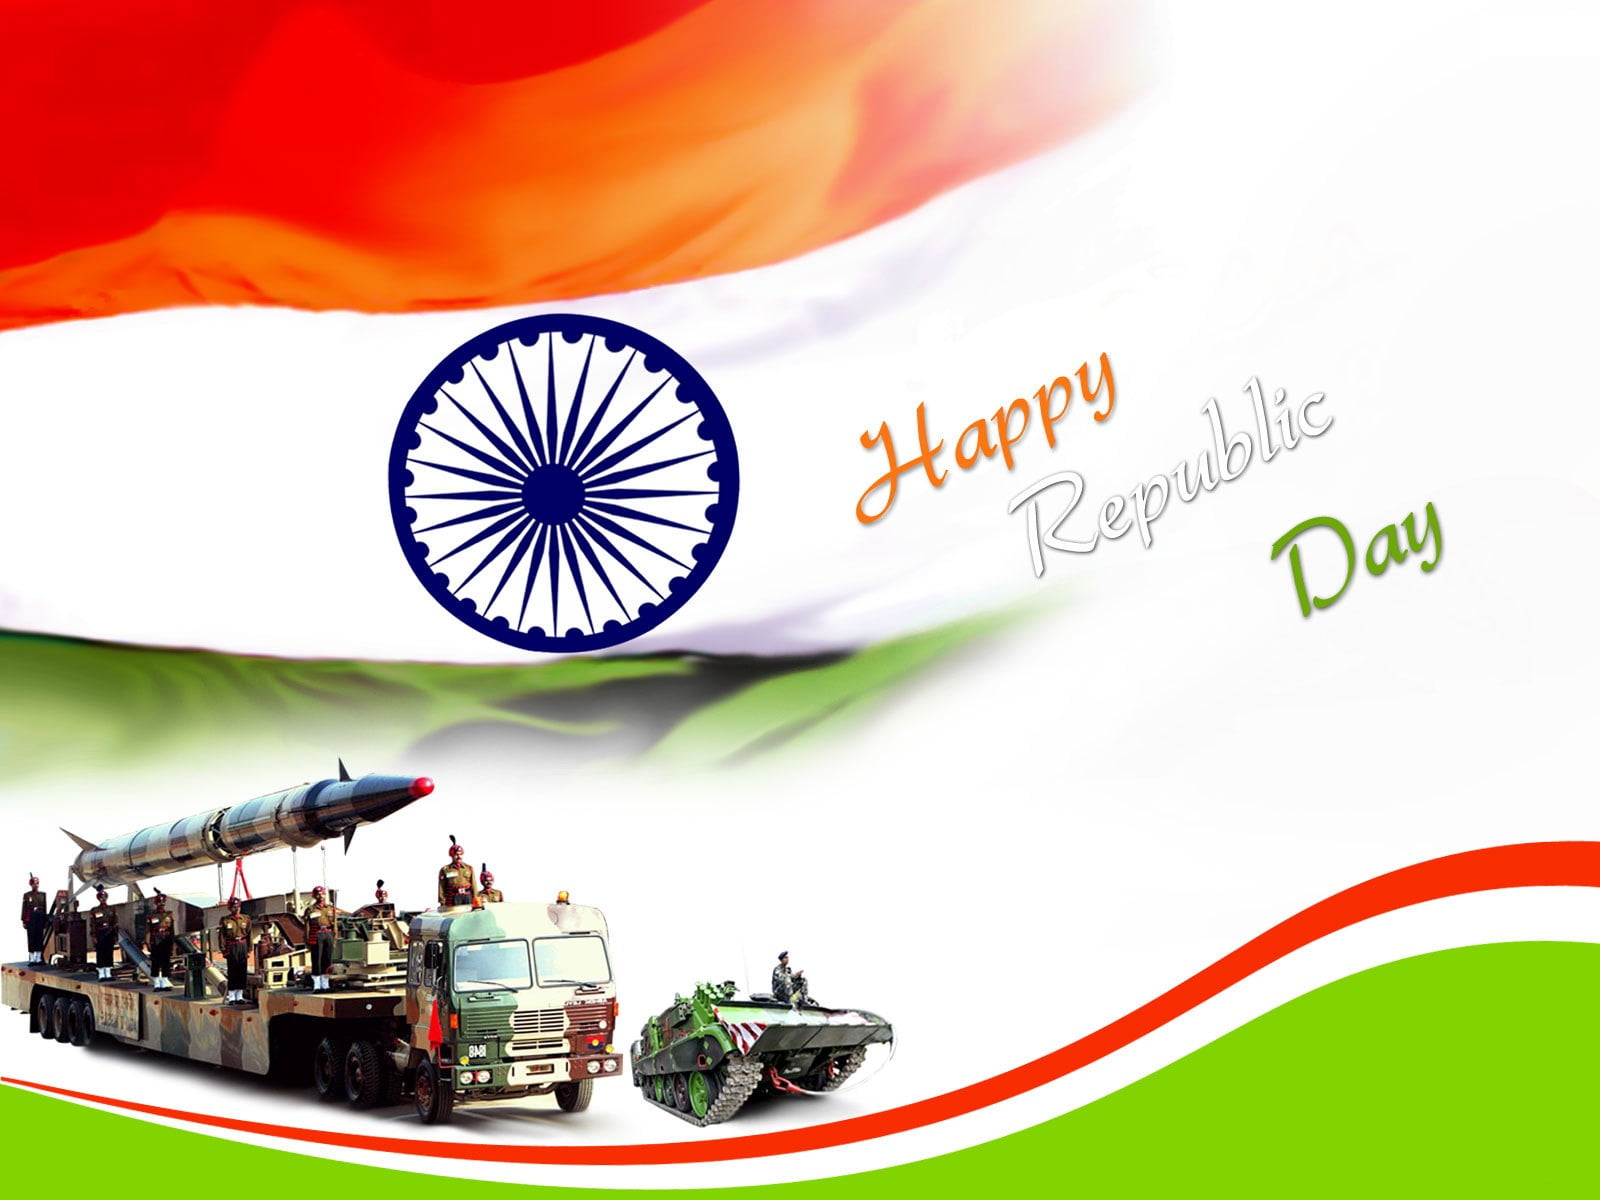 Happy Republic Day, Indian flag, Festivals / Holidays, text, communication